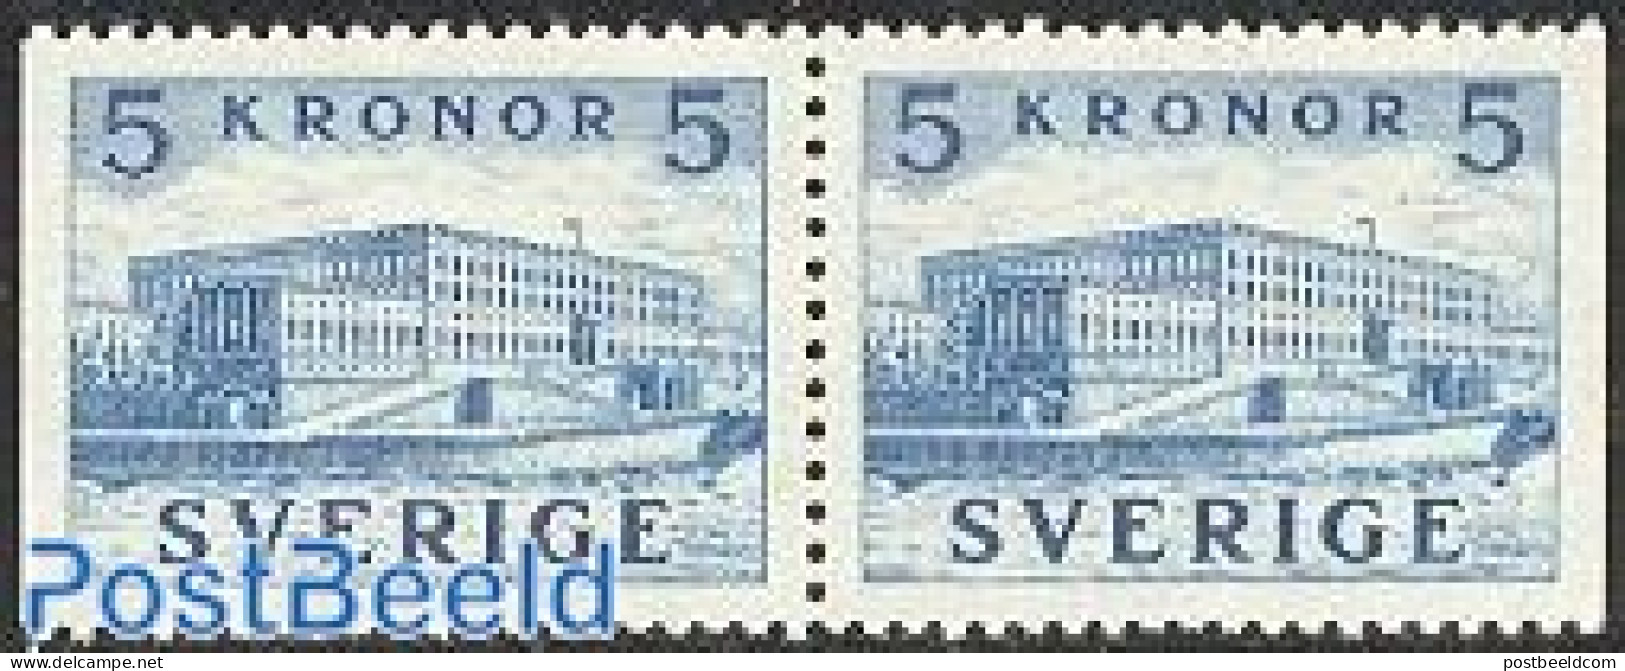 Sweden 1958 Definitive Booklet Pair, Mint NH, Art - Castles & Fortifications - Ongebruikt